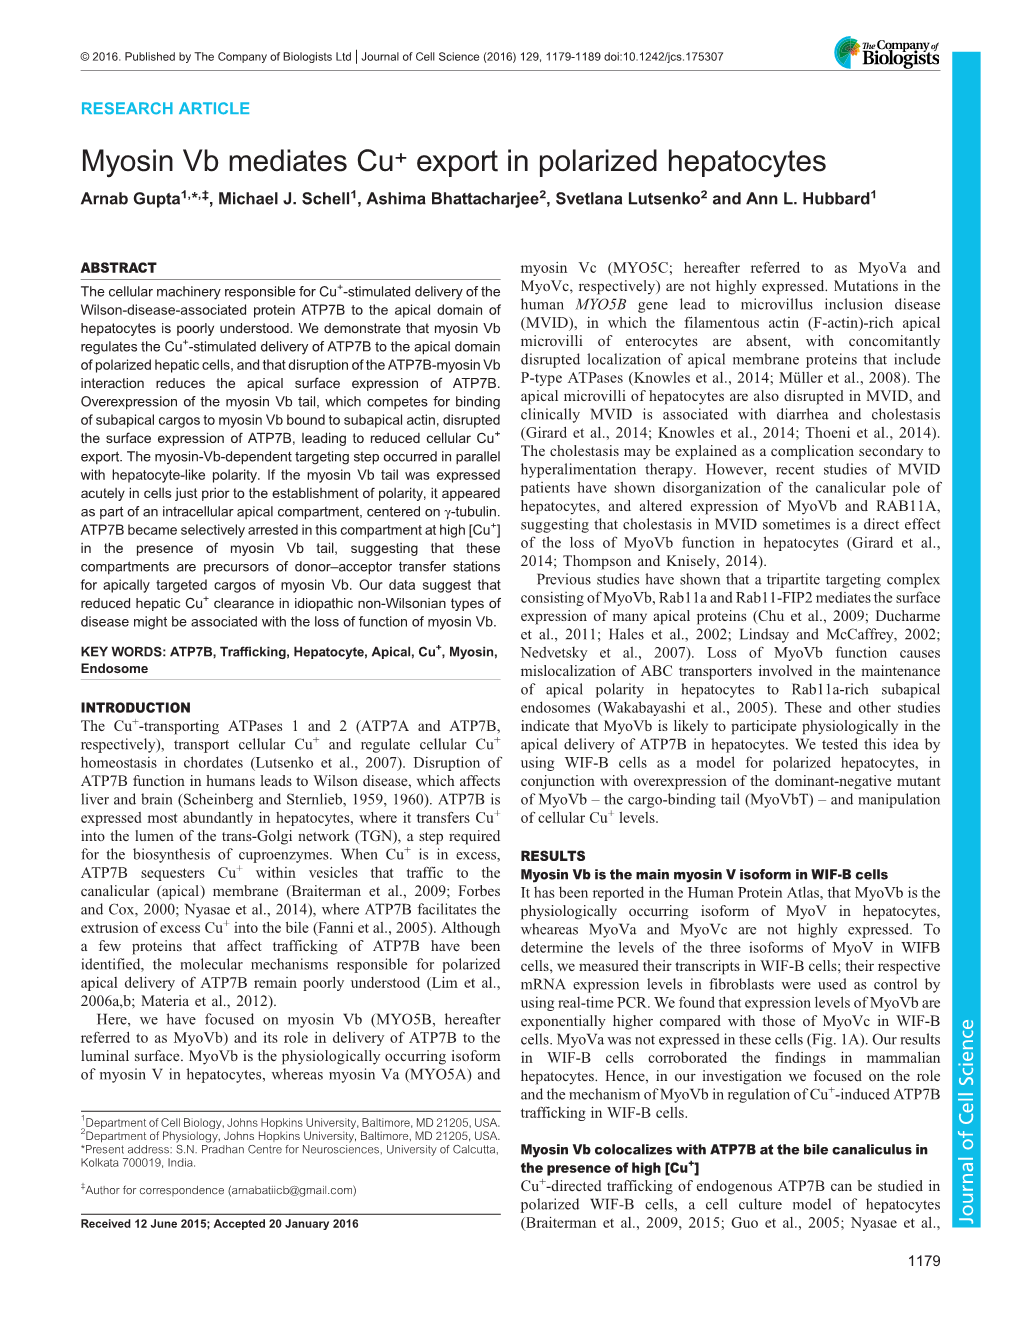 Myosin Vb Mediates Cu+ Export in Polarized Hepatocytes Arnab Gupta1,*,‡, Michael J